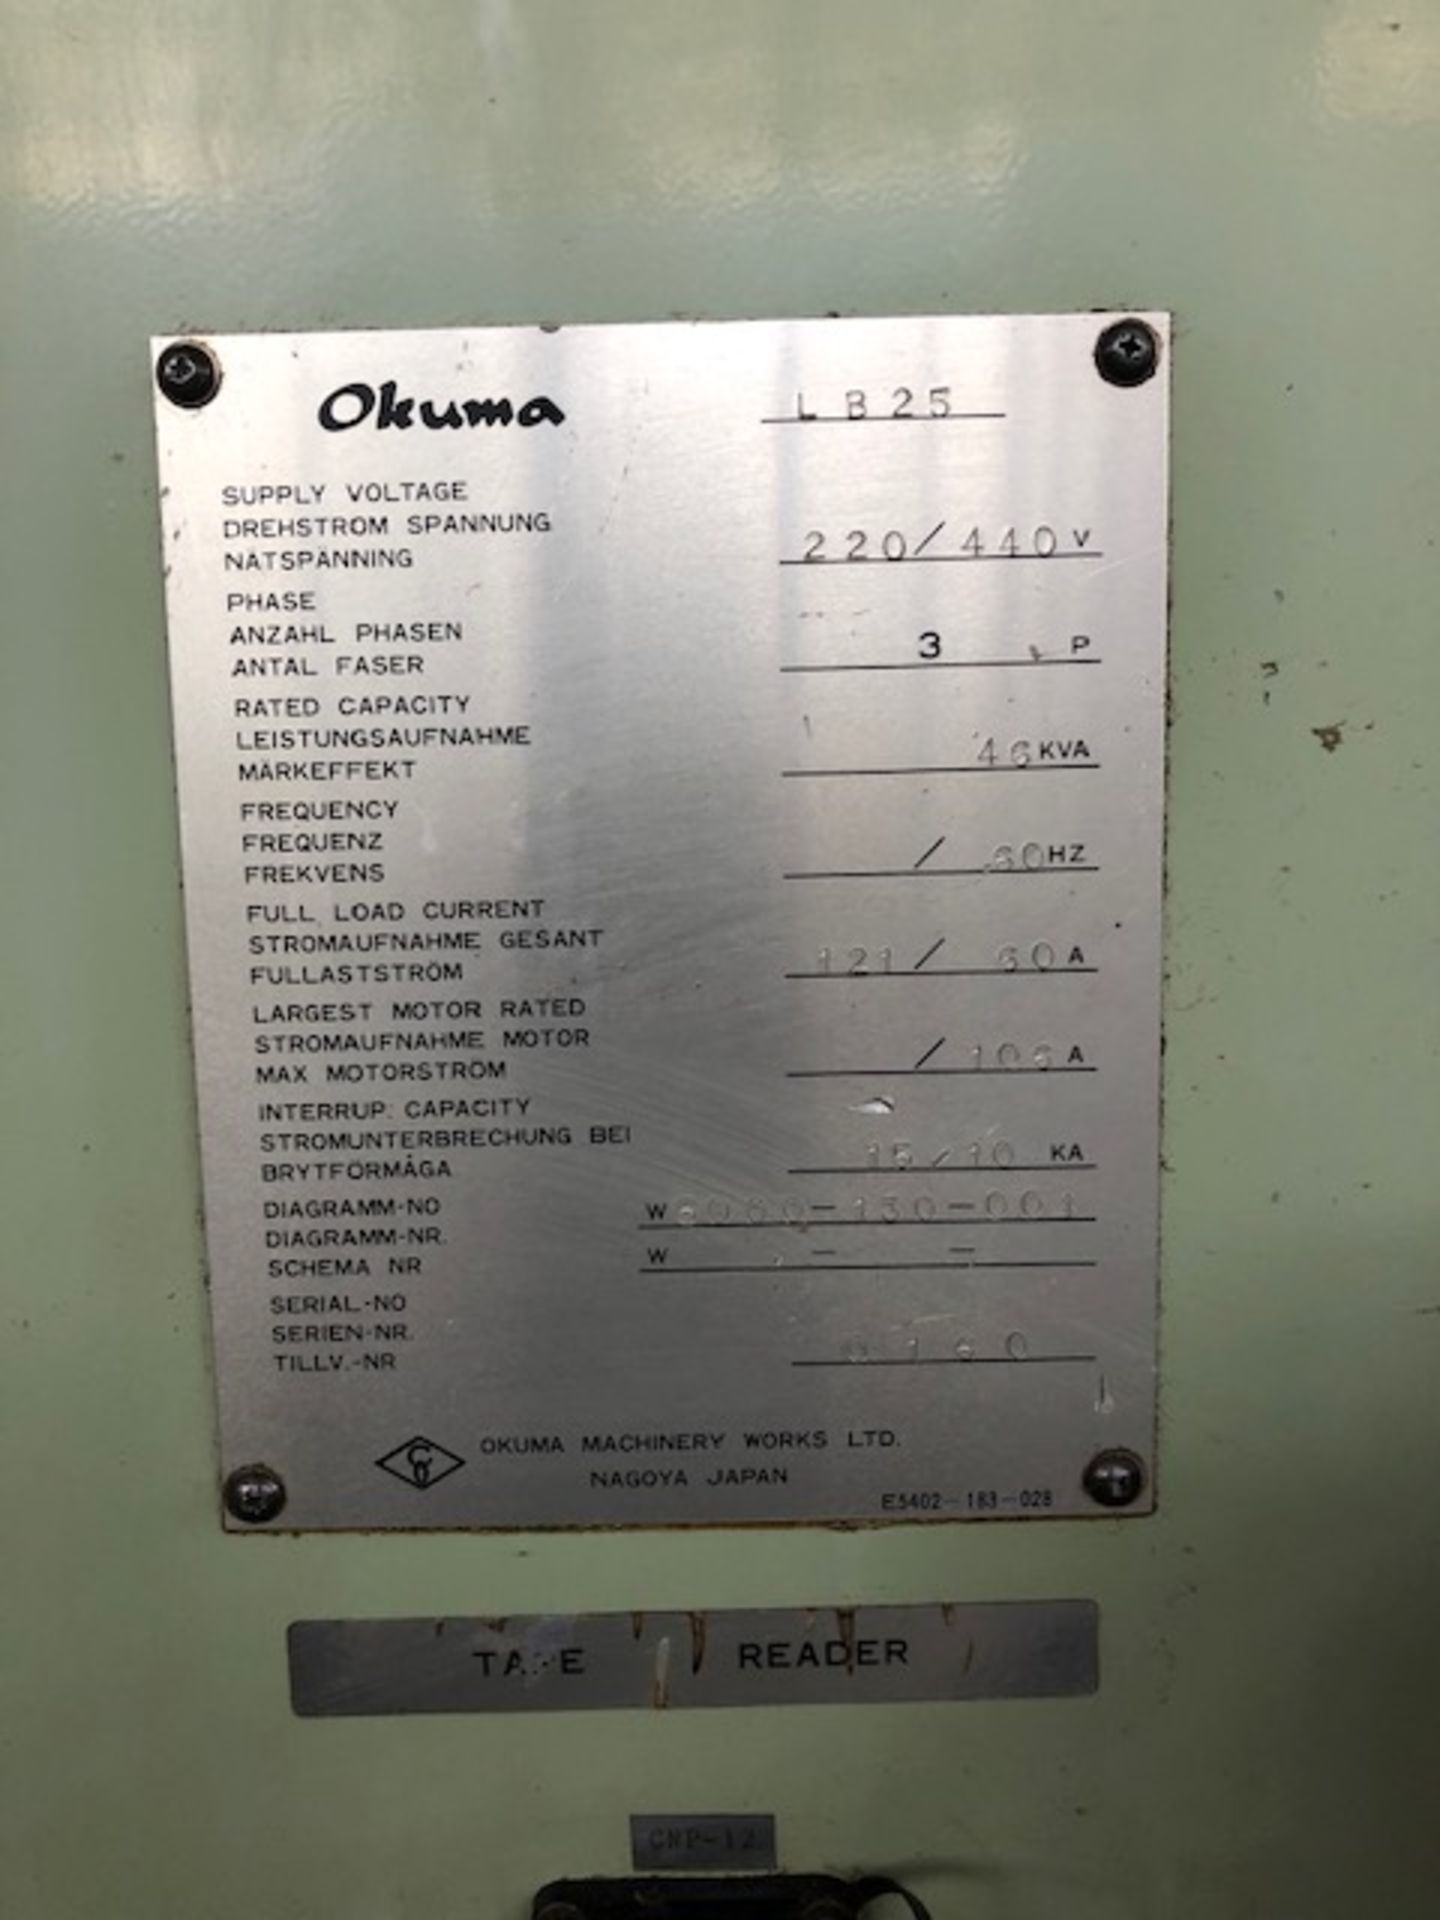 Okuma Model LB-25 CNC Turning Center, s/n 0160, New 1990, OSP-5000L-G CNC Control, 3.15" Capacity, - Image 2 of 4